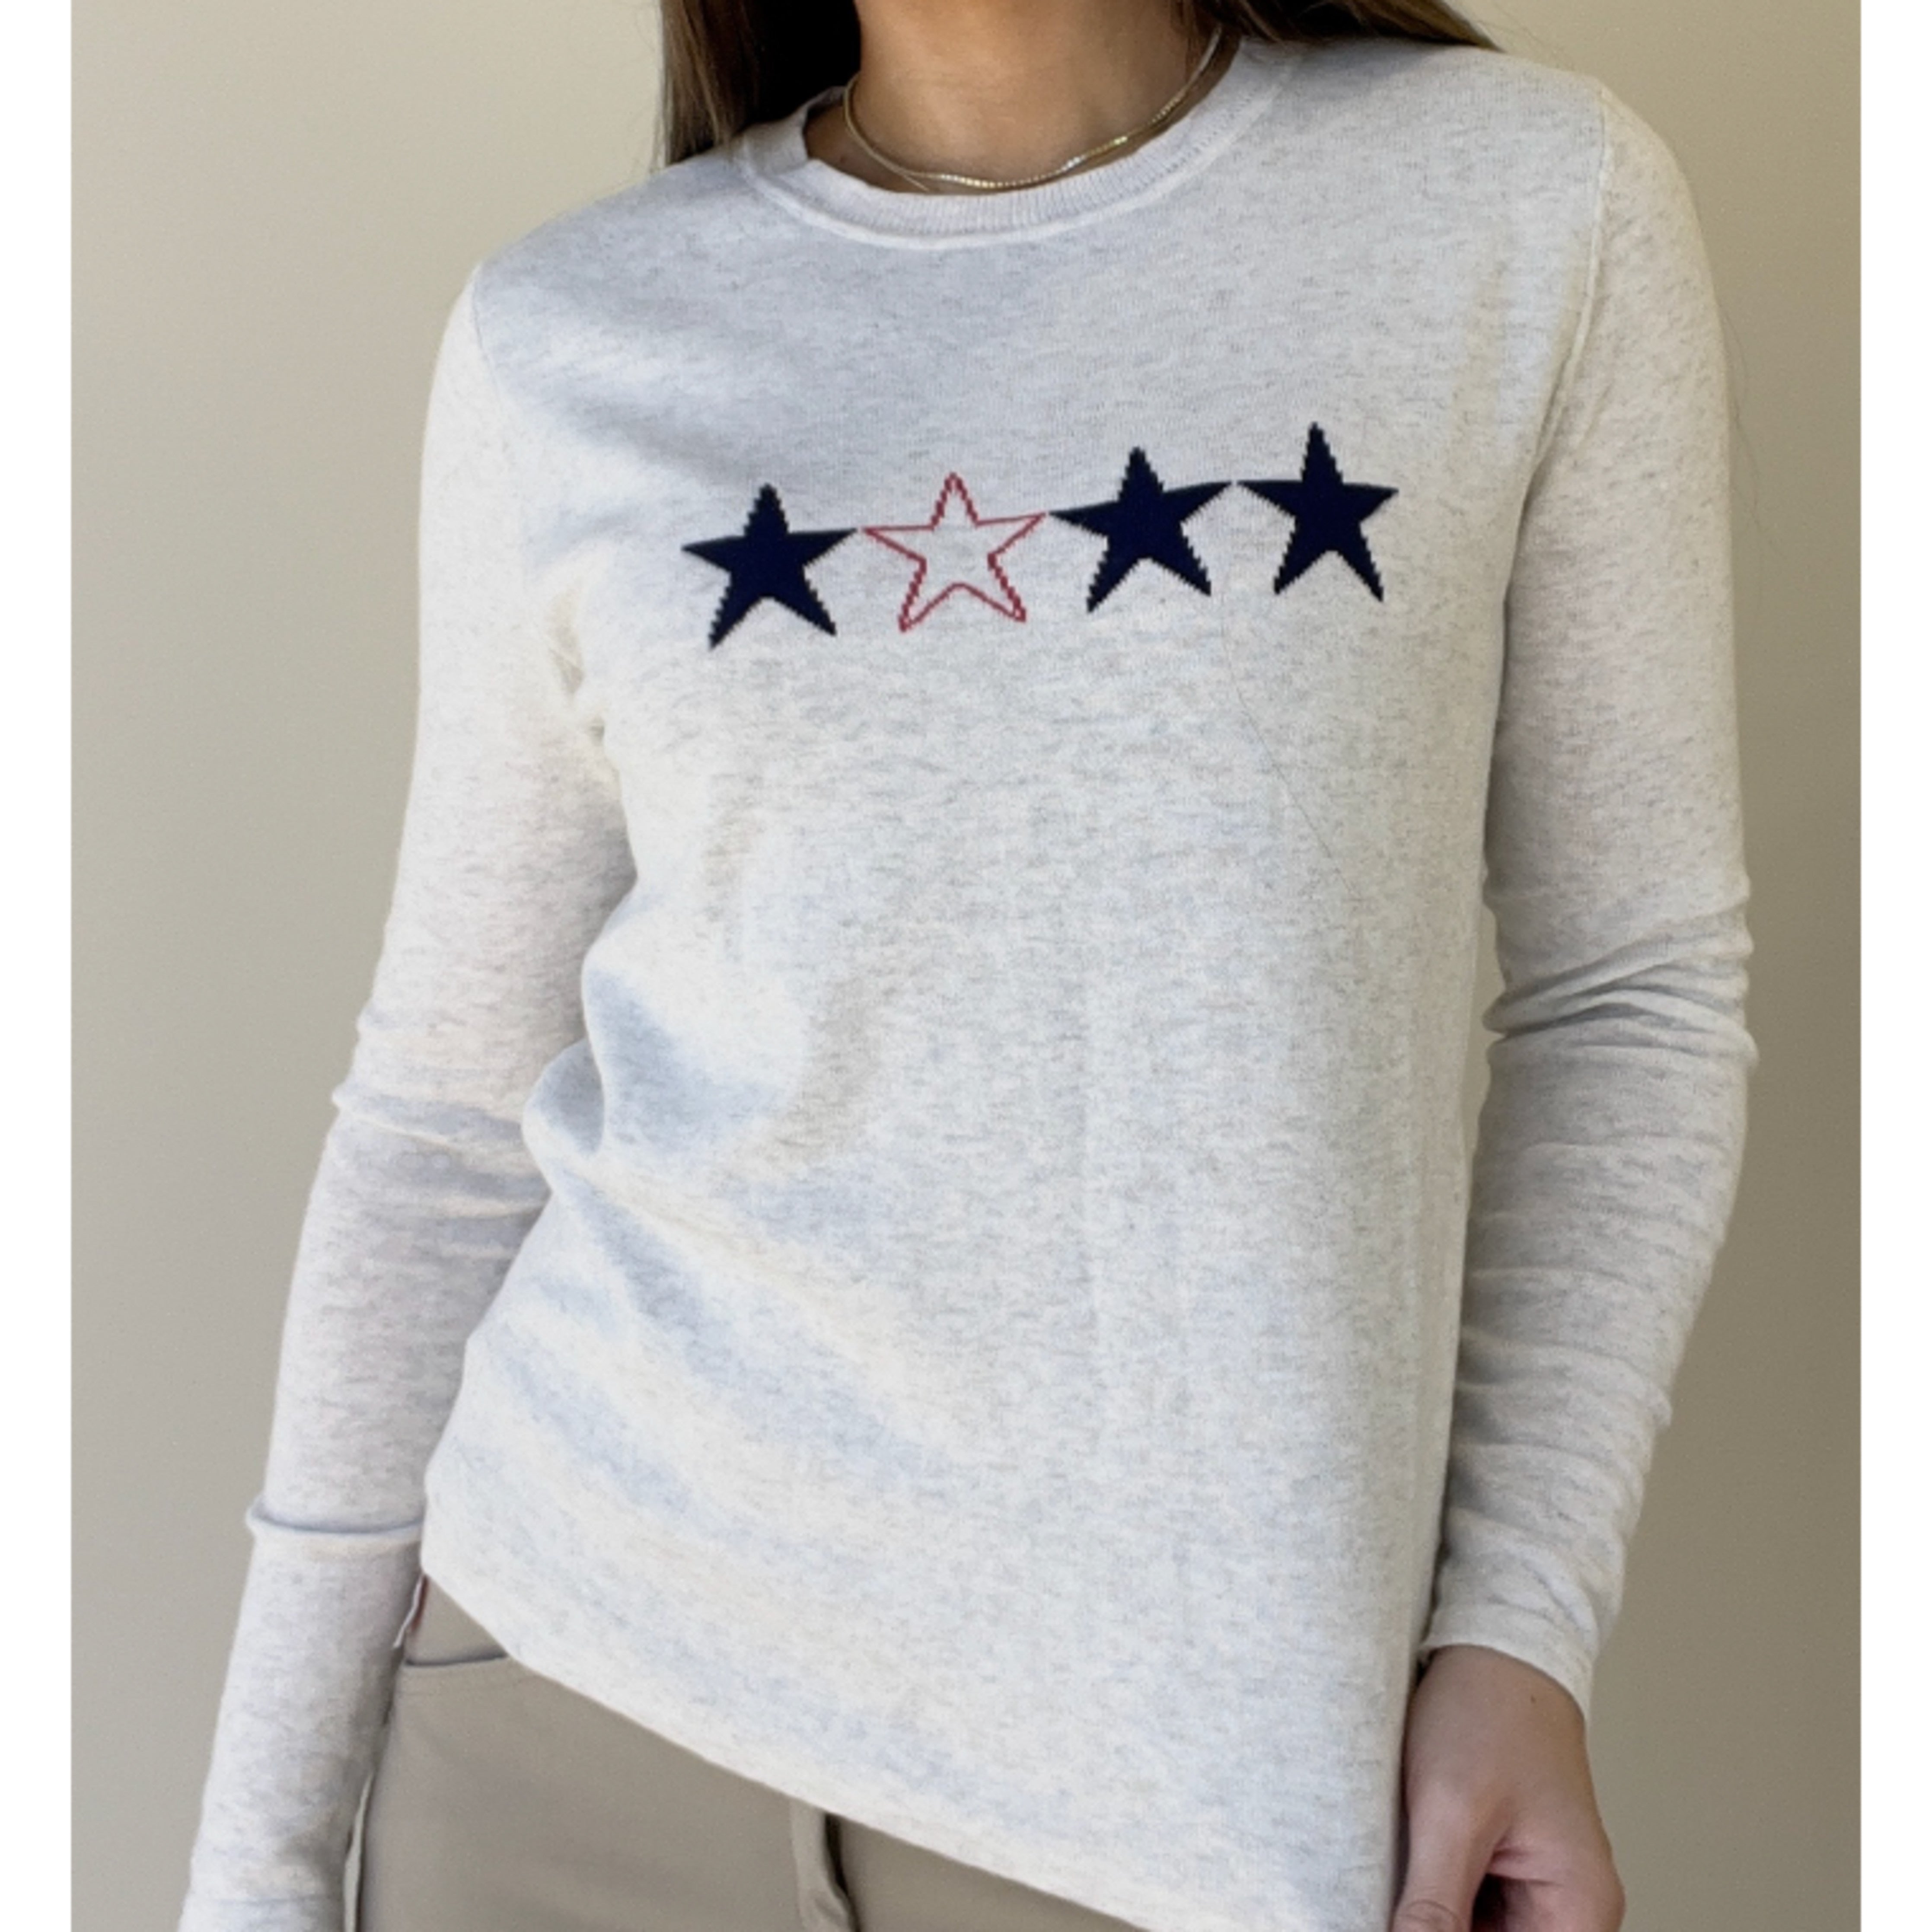 TKEQ 4-Star Sweater